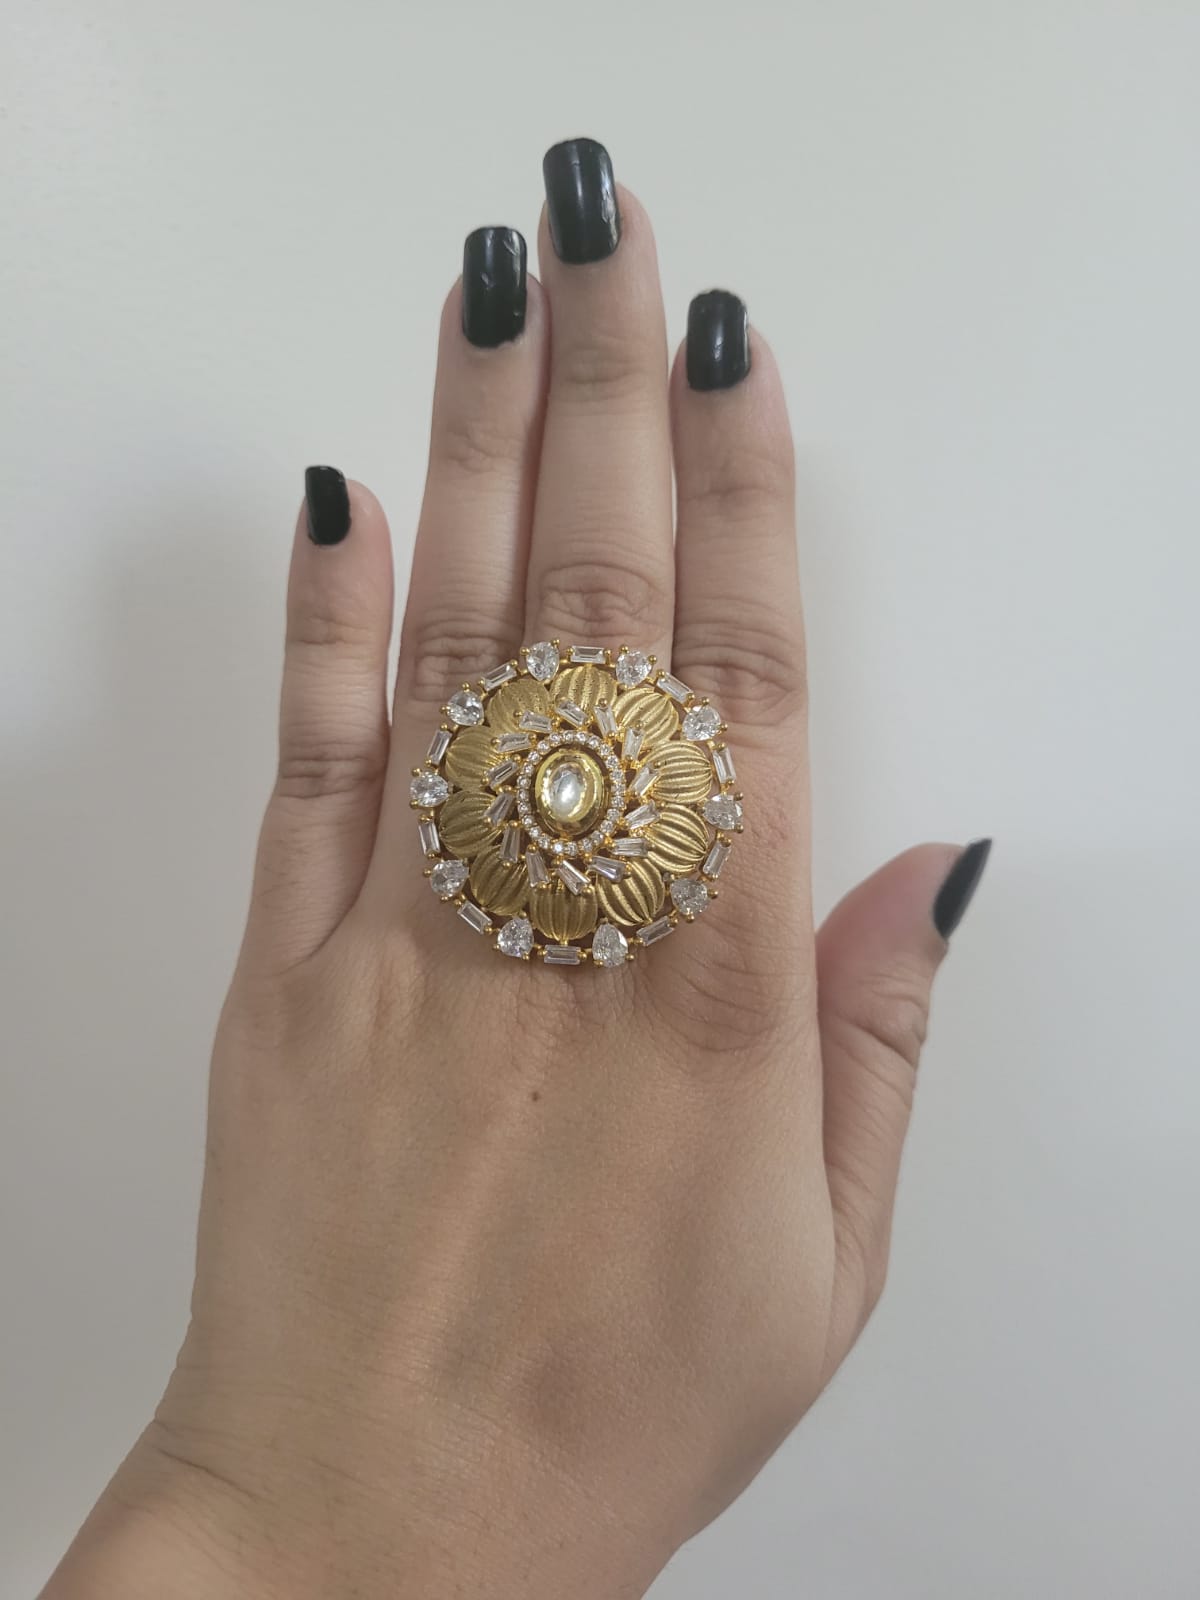 Black Color Lord Krishna Meenakari Finger Ring For Women (KMR614BLK)